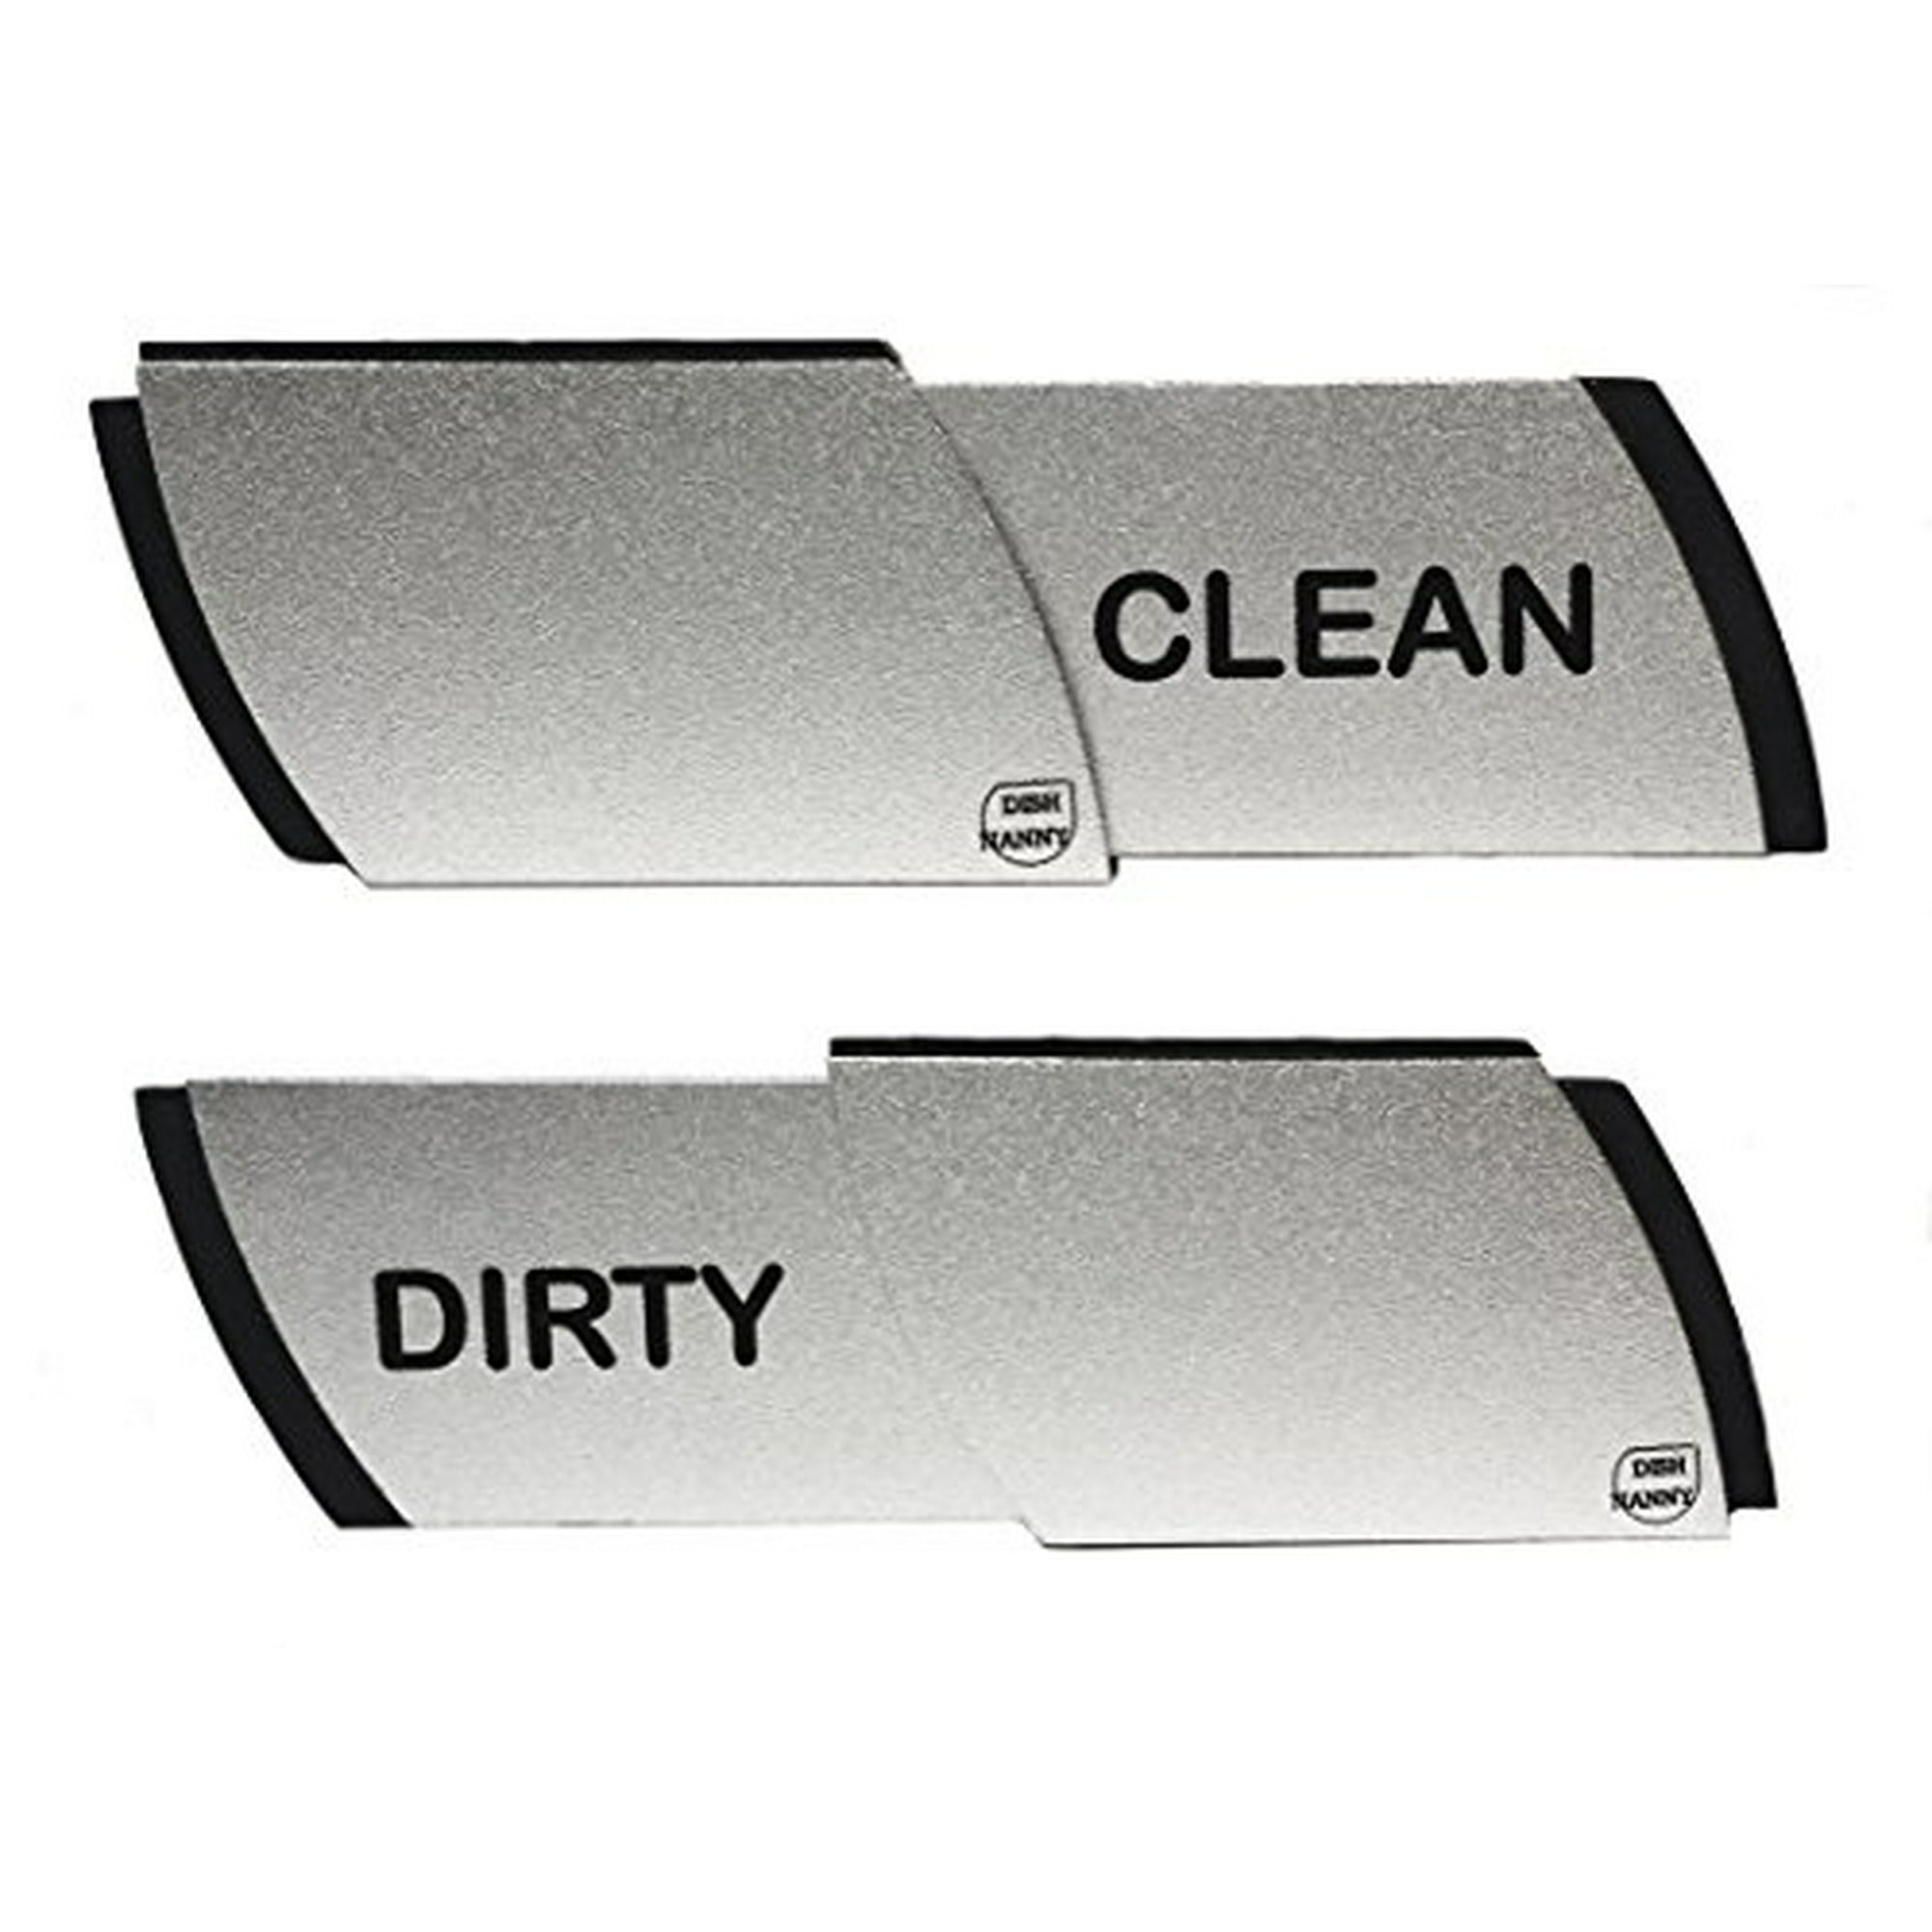 clean dirty dishwasher magnet australia